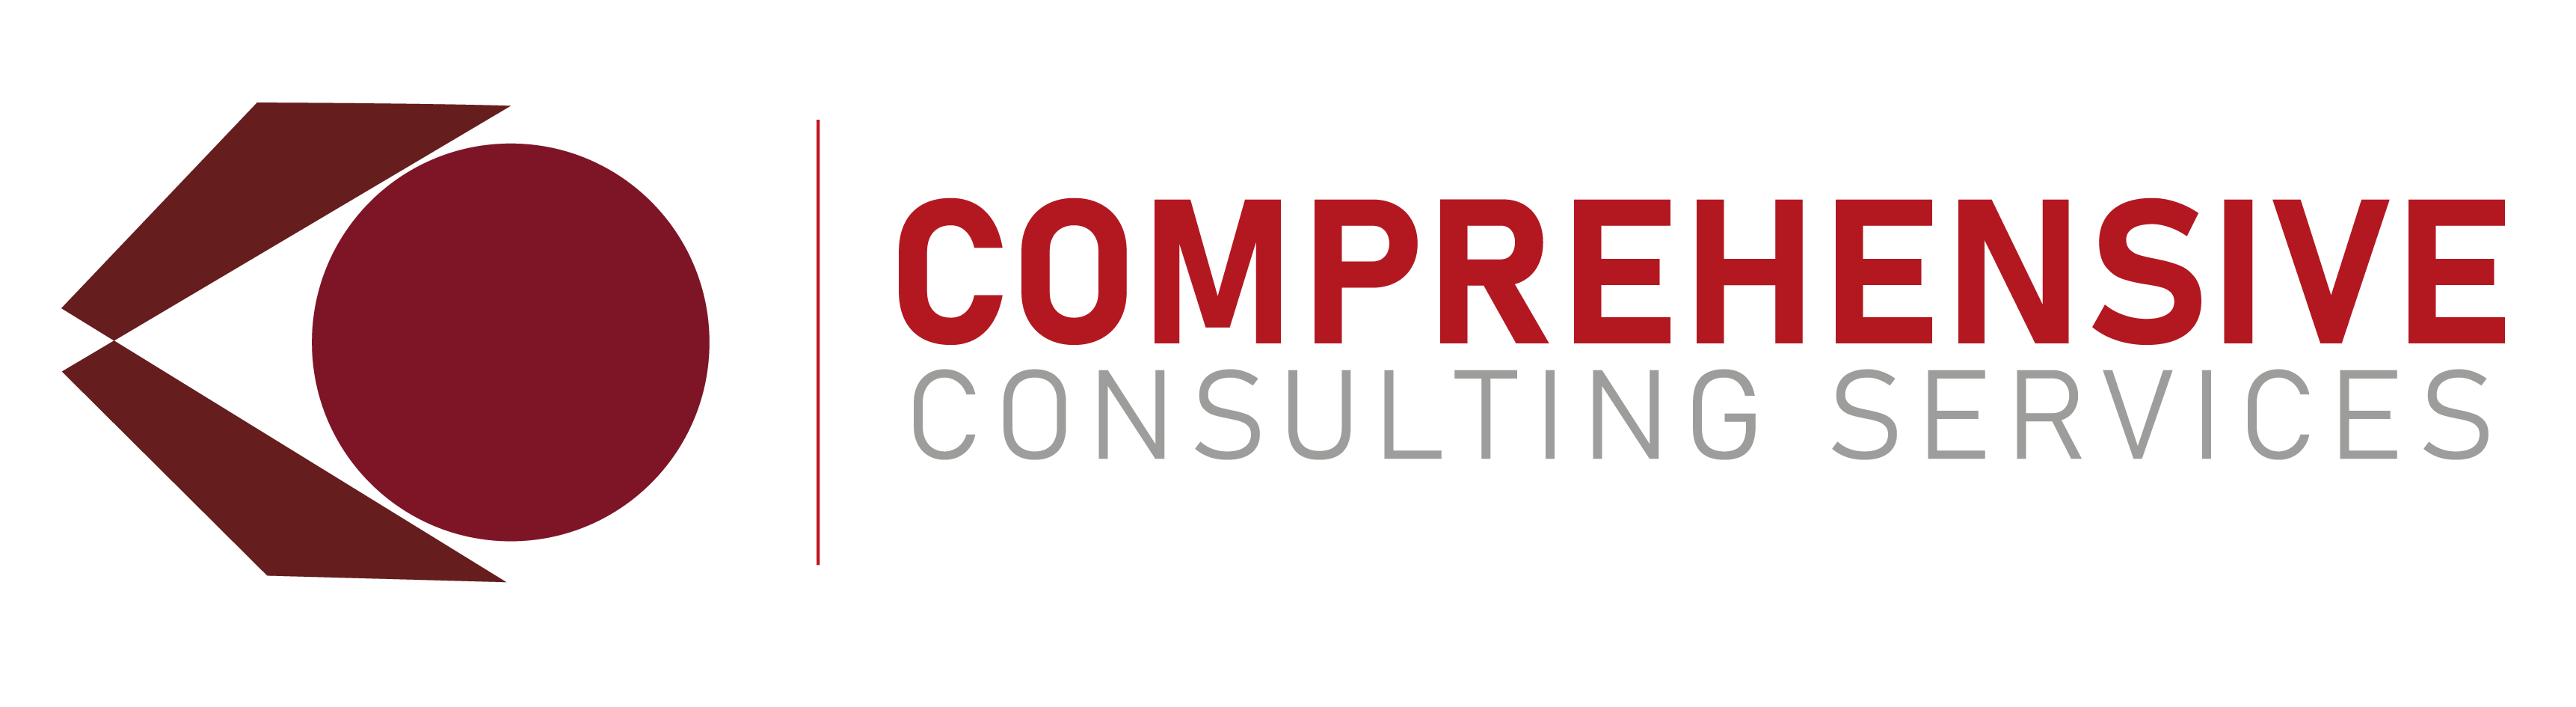 Comprehensive Consulting Service Company